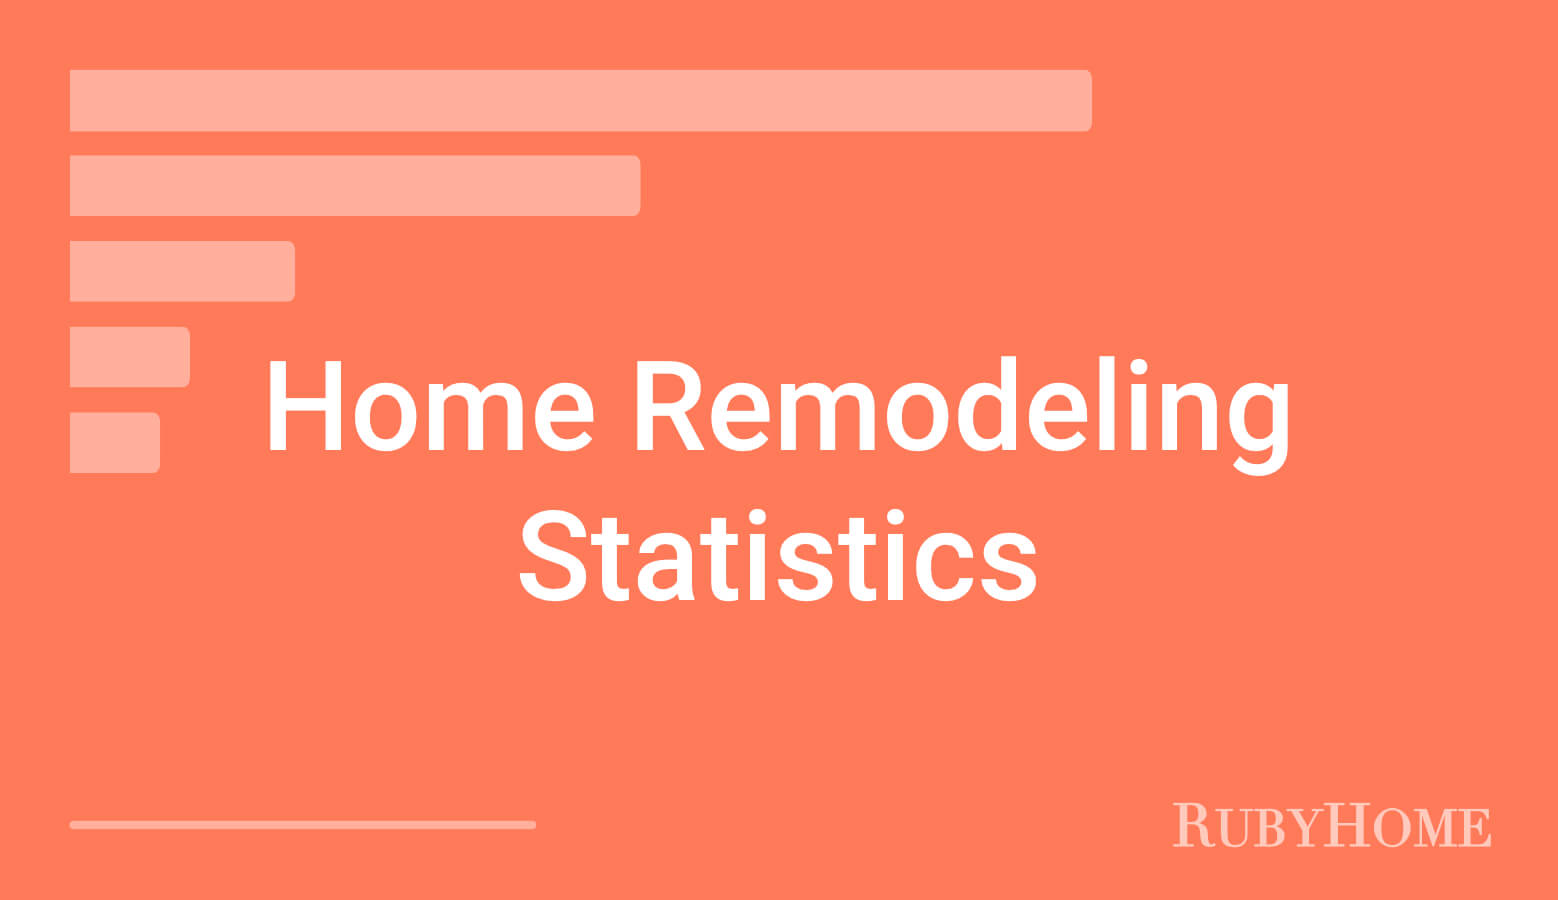 Home Remodeling Statistics